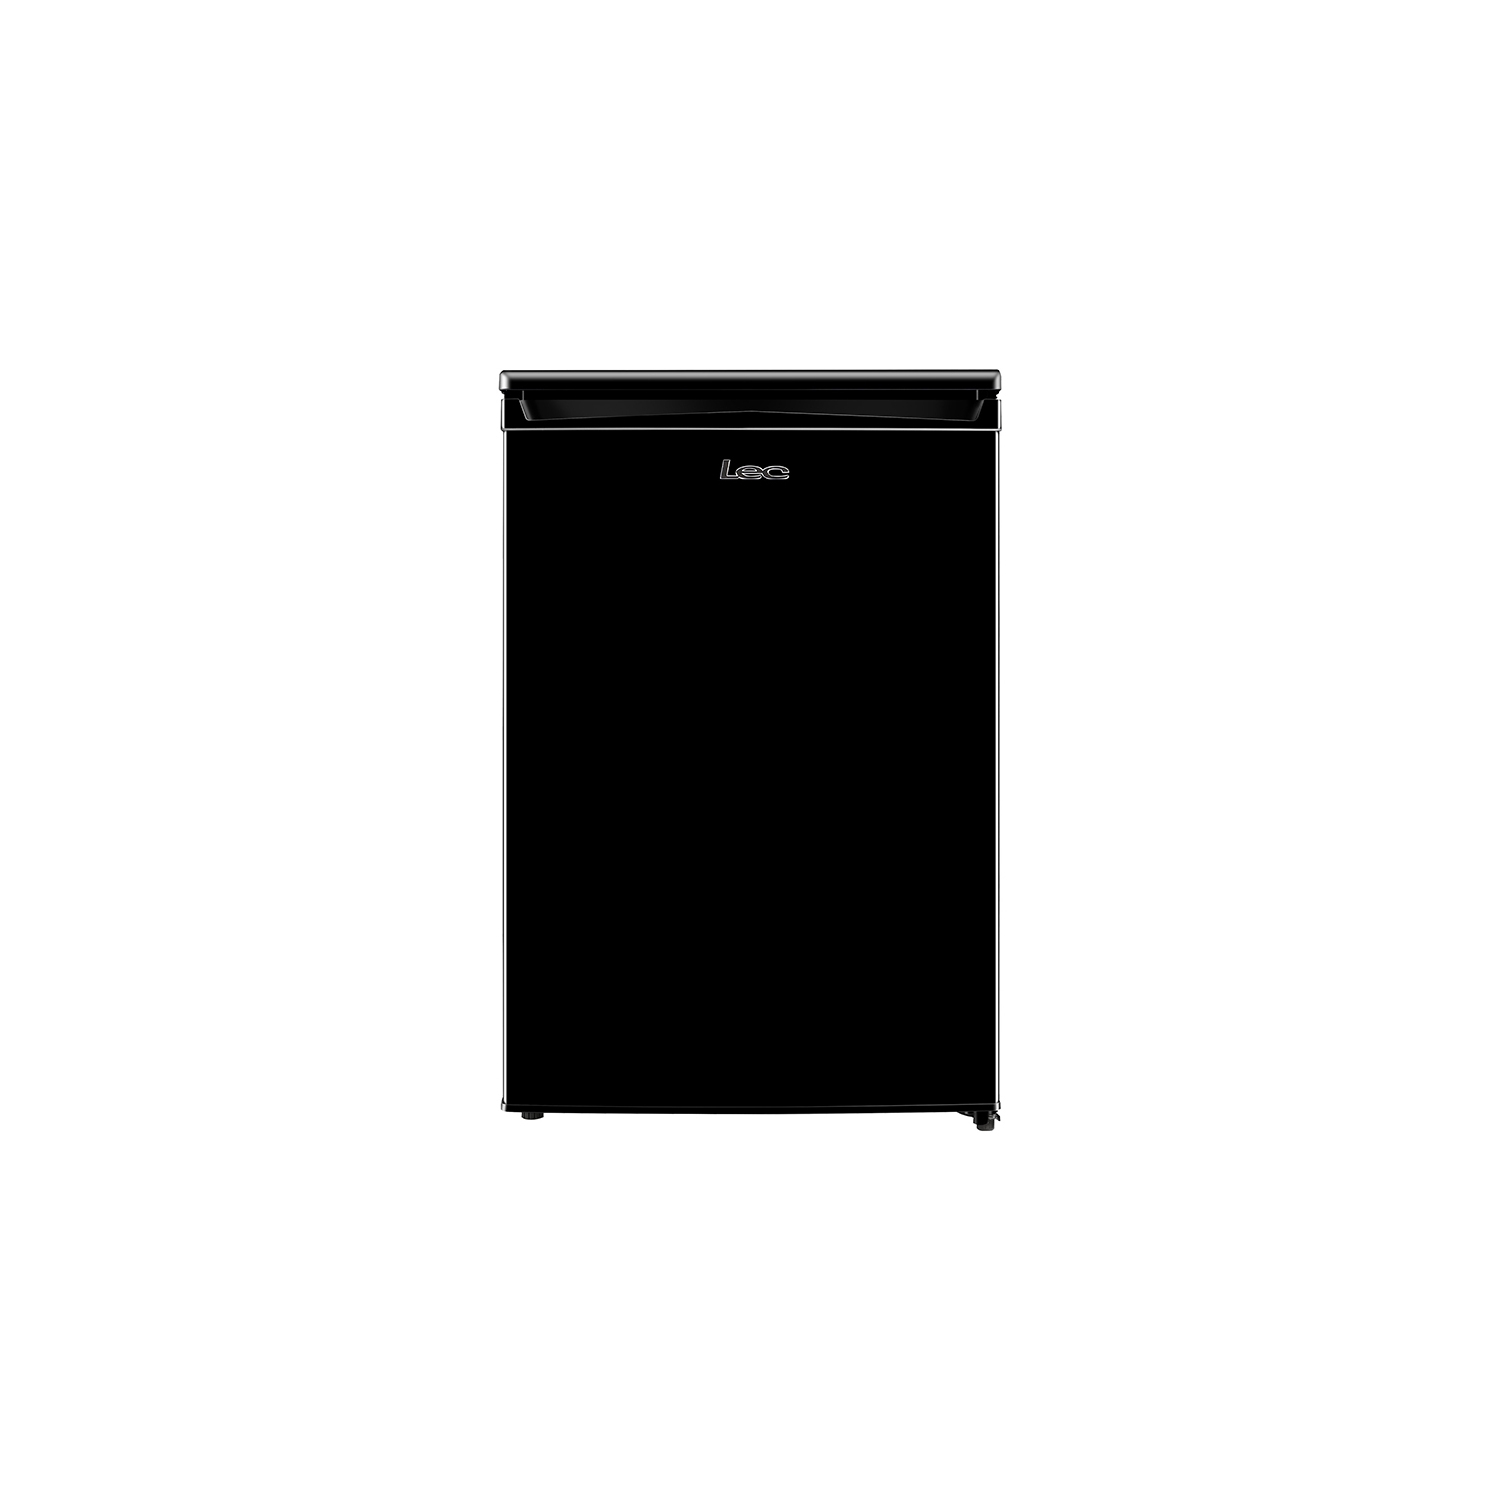 Lec Undercounter Freezer In Black - 0